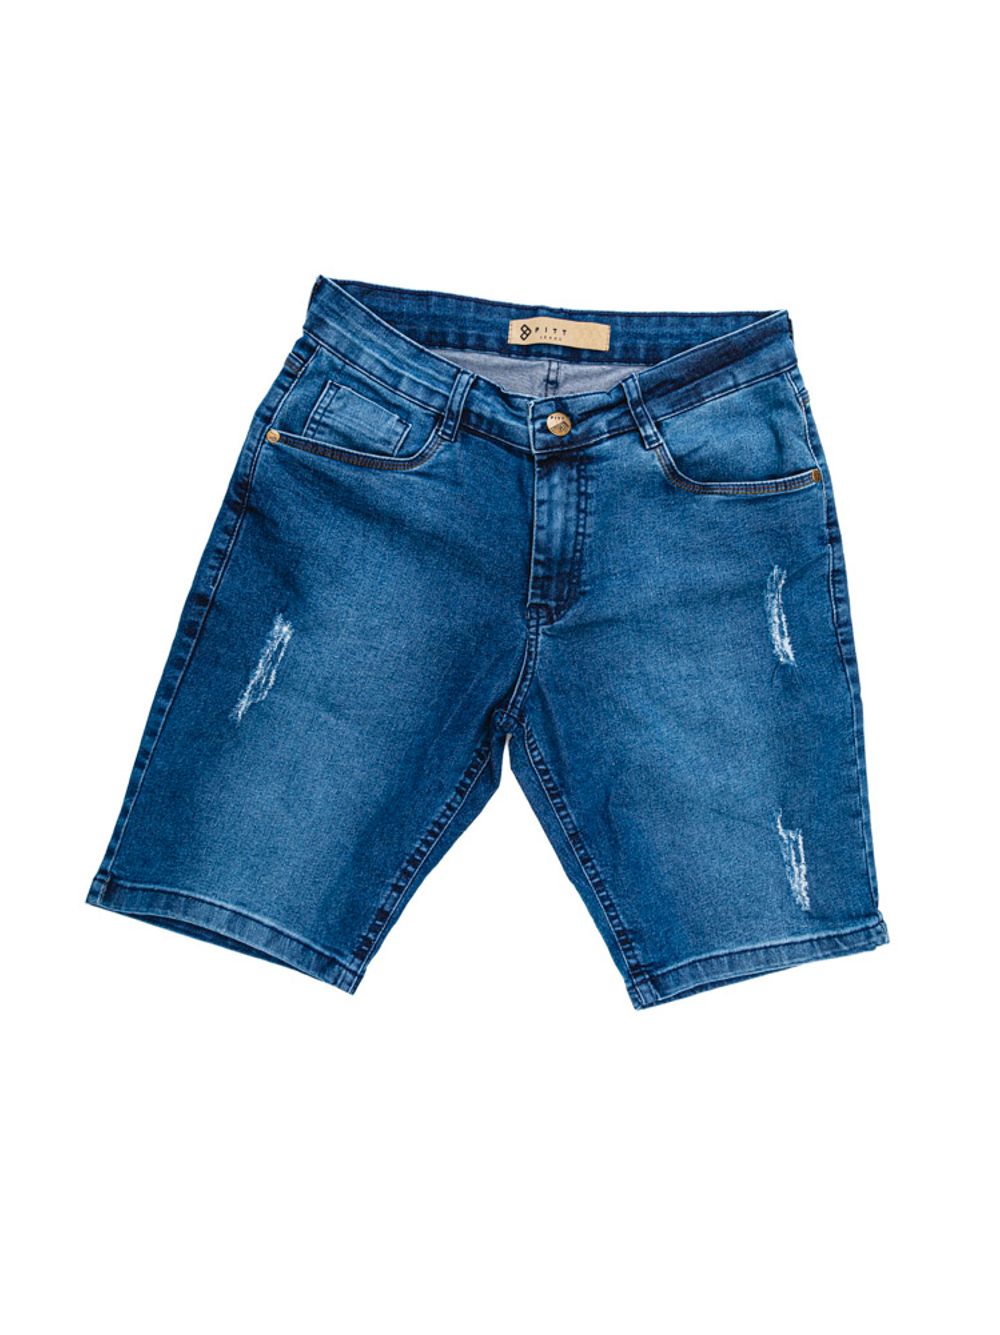 Bermuda Jeans Pitt Masculina Curta 023851020 Azul - pittol